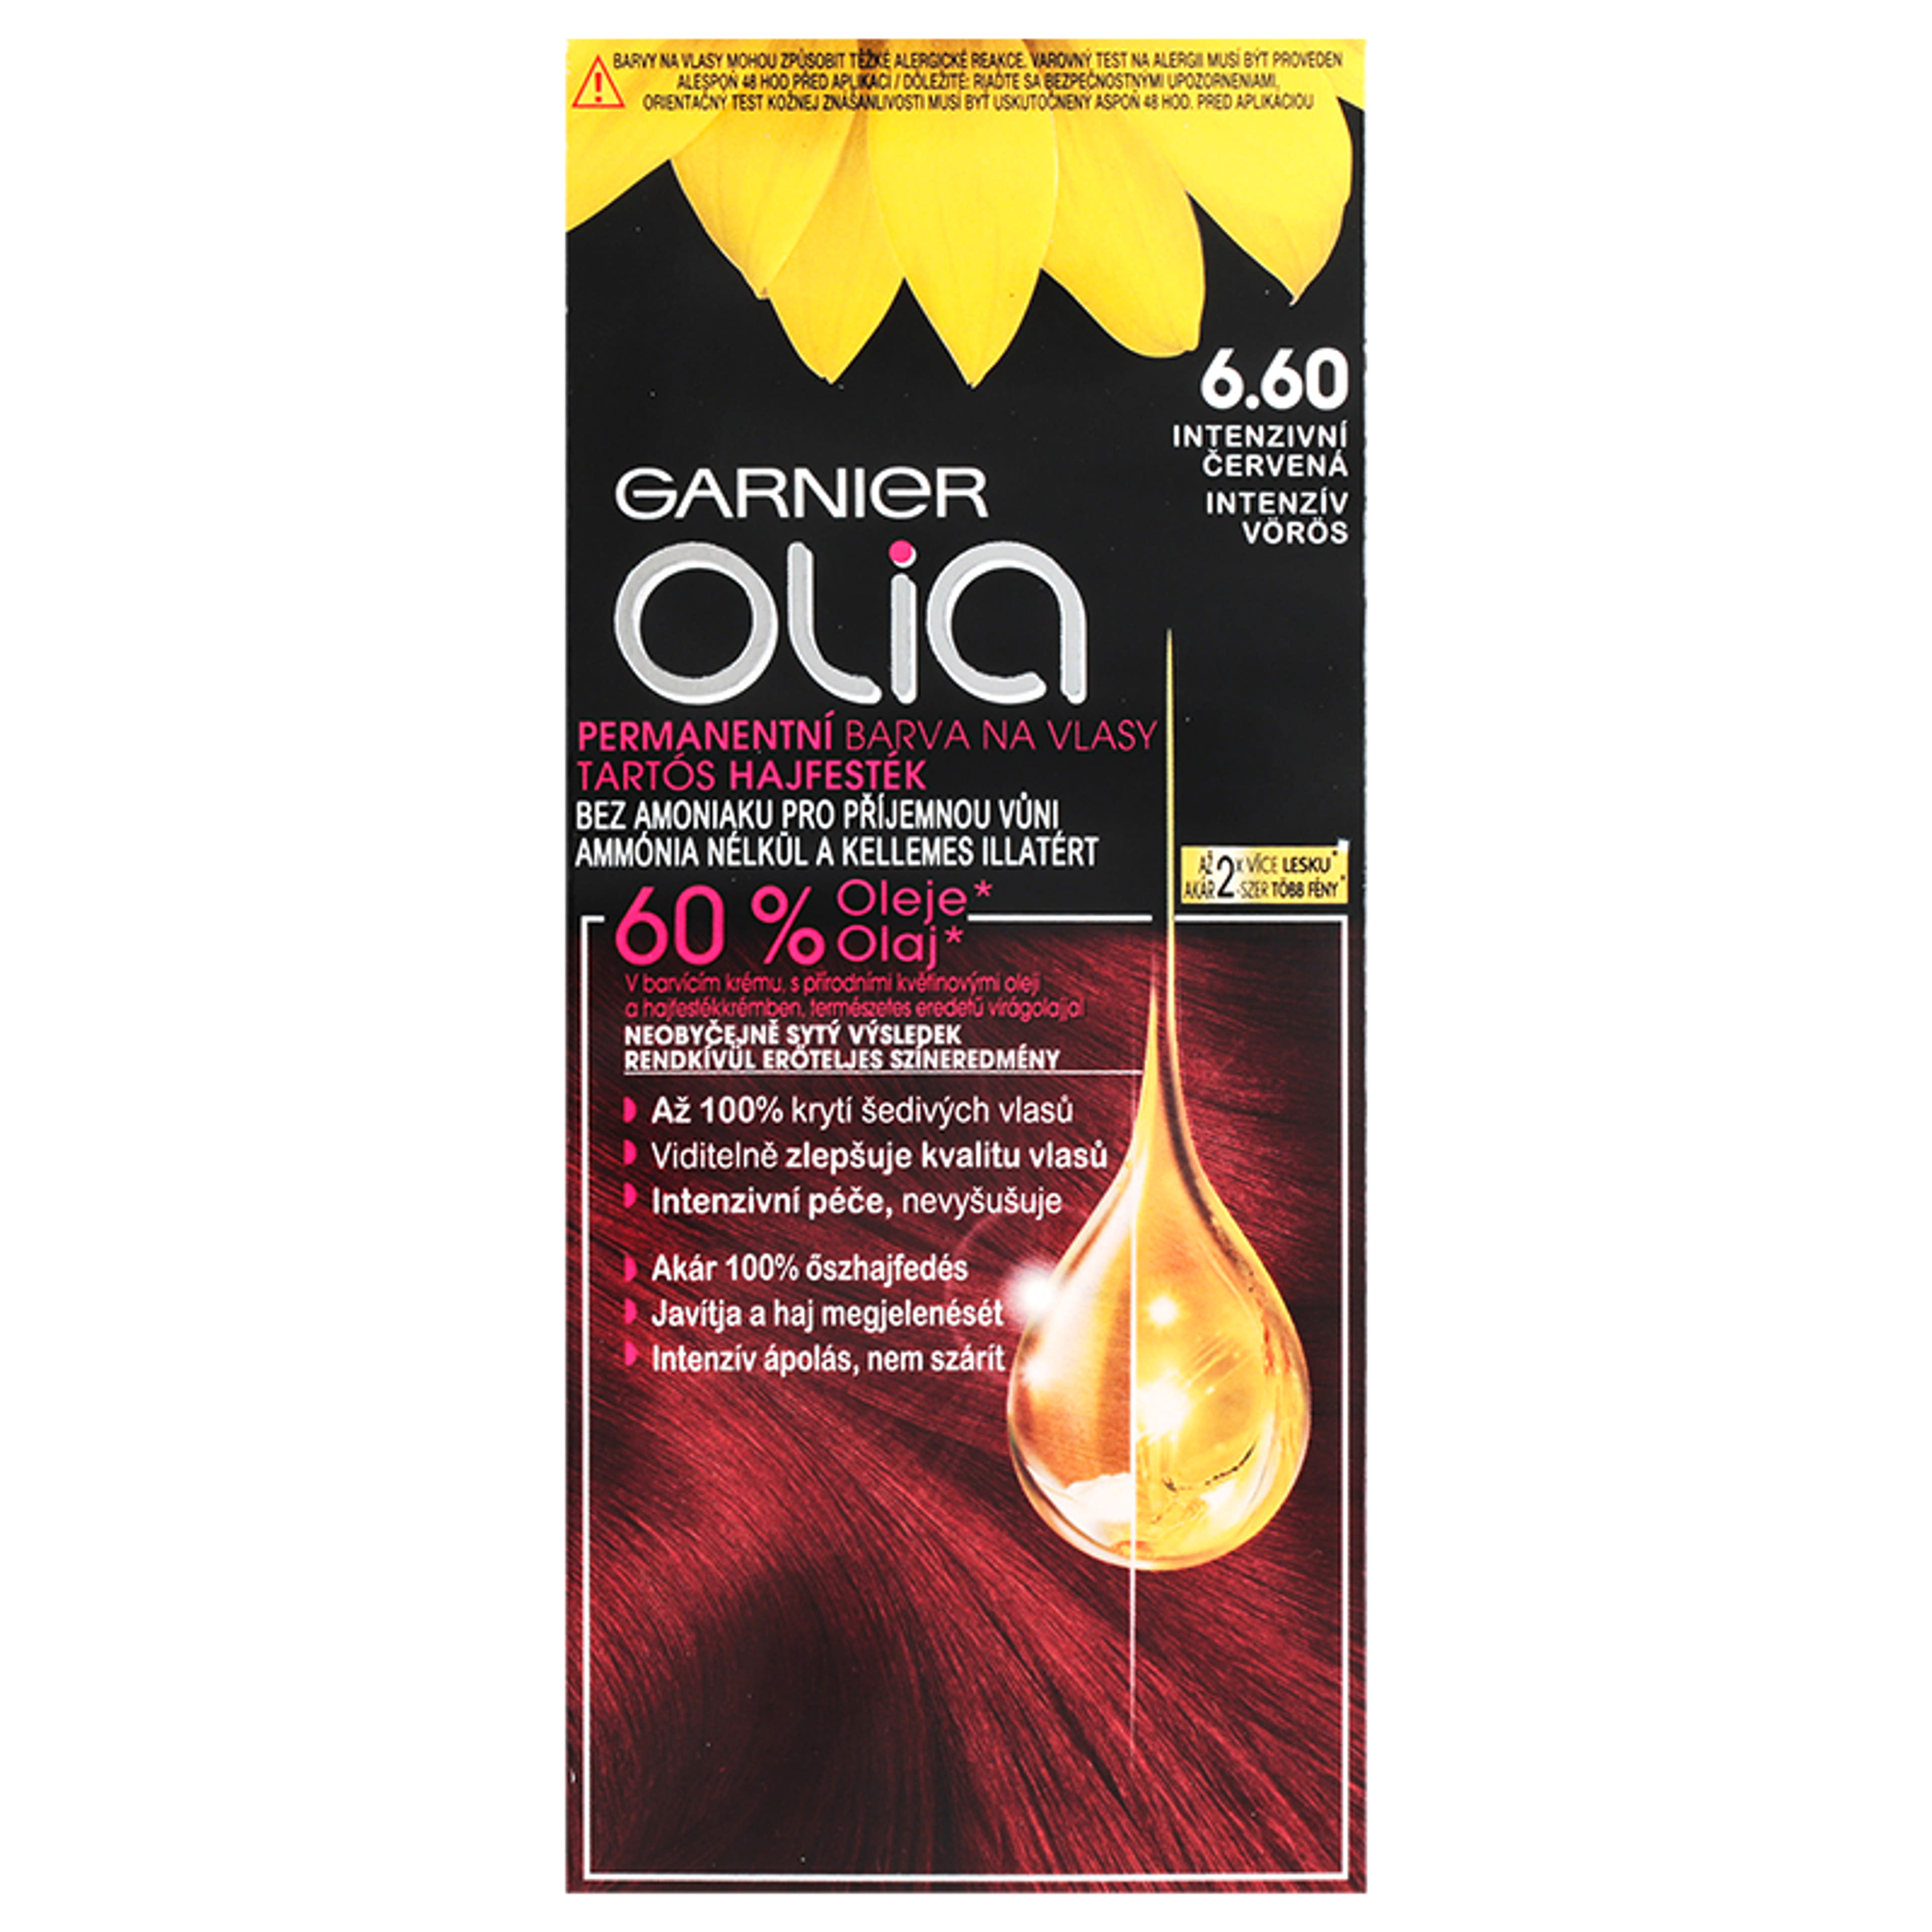 Garnier Olia tartós hajfesték 6.60 Intenzív vörös - 1 db-2